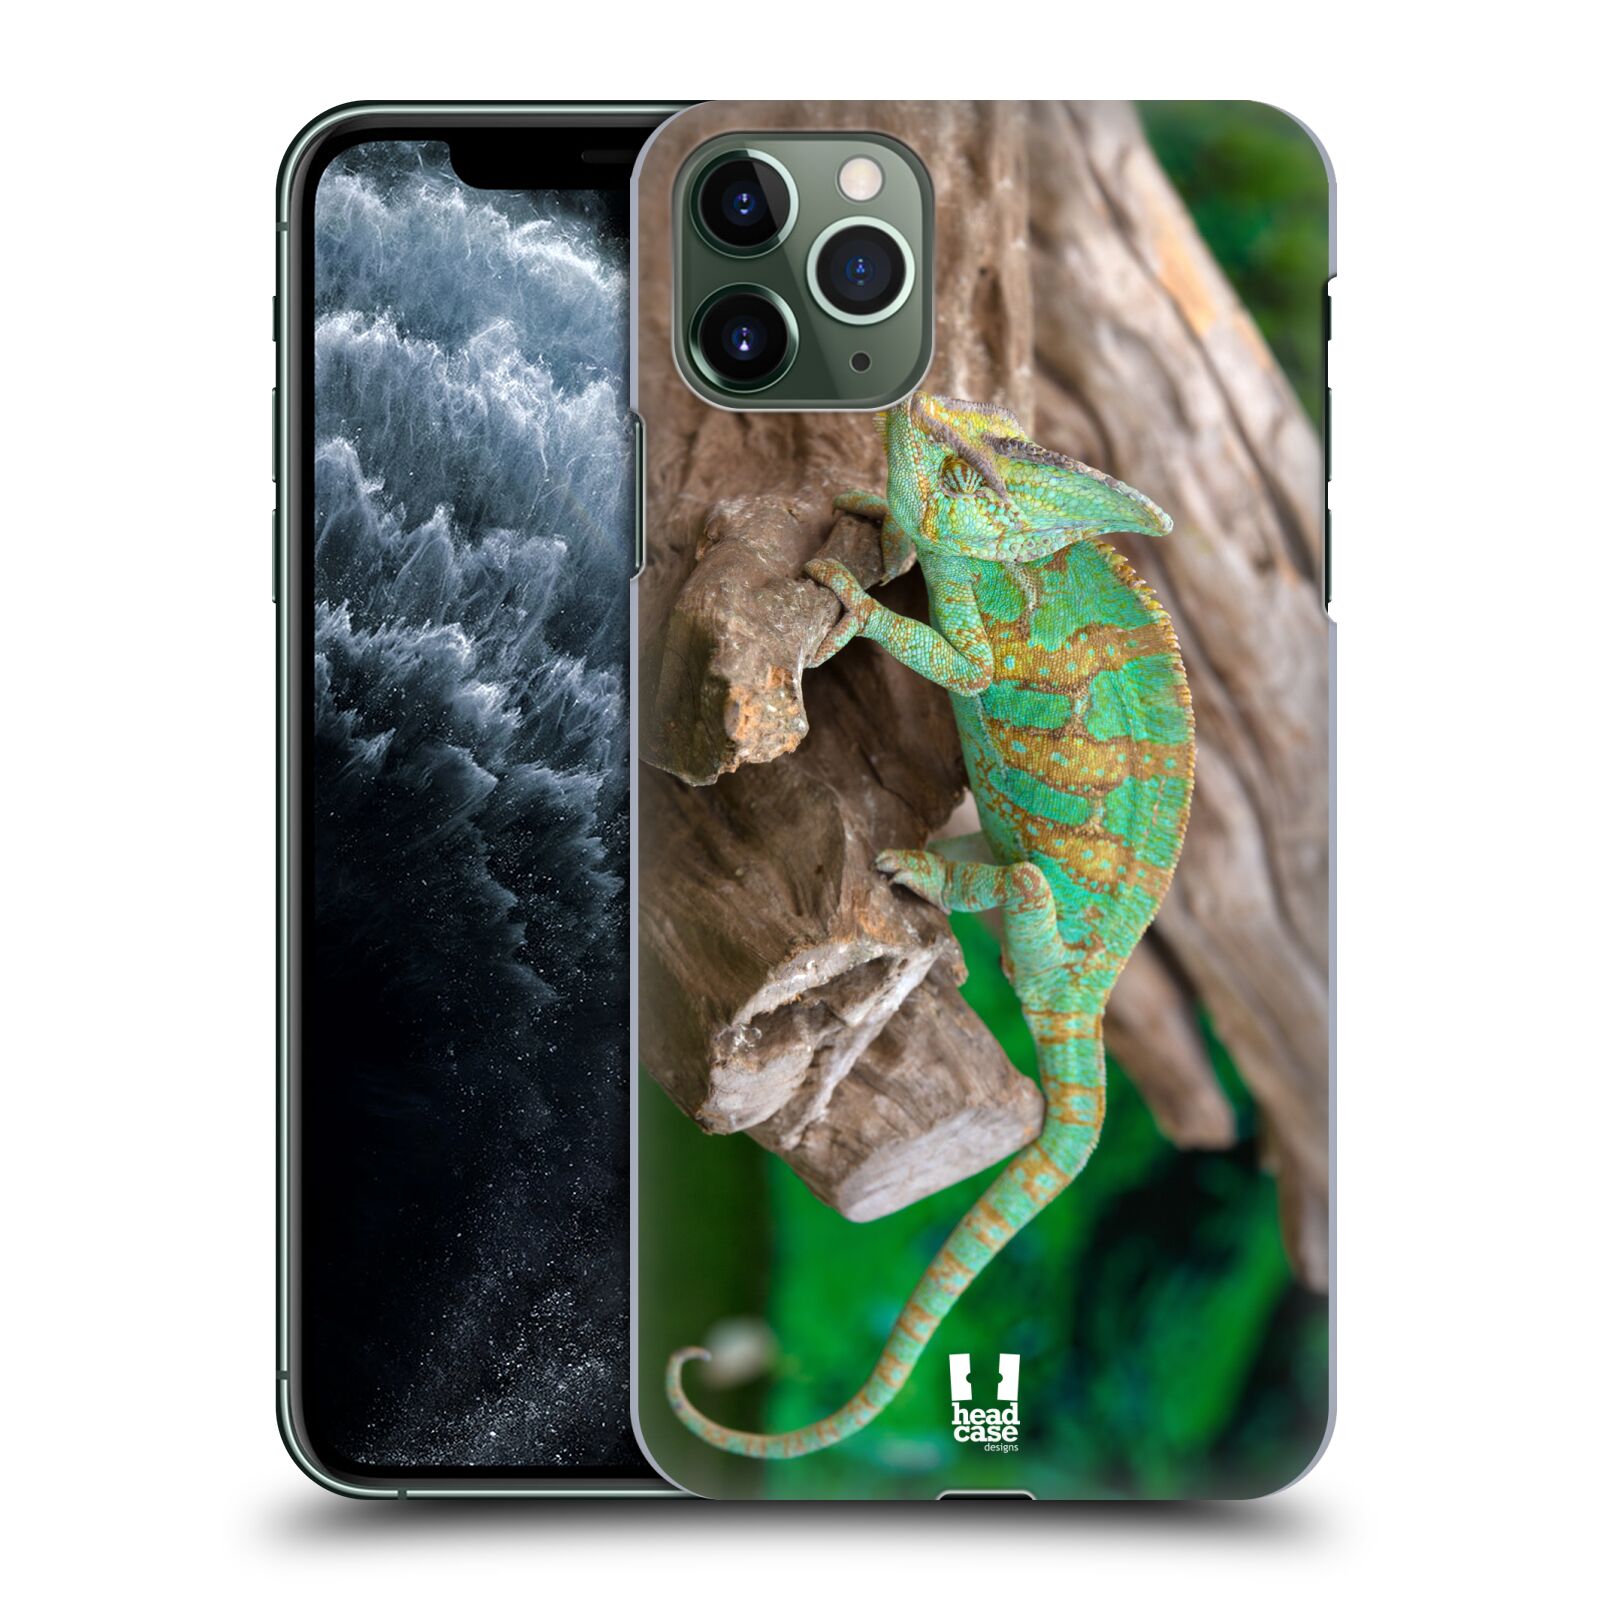 Pouzdro na mobil Apple Iphone 11 PRO MAX - HEAD CASE - vzor slavná zvířata foto chameleon